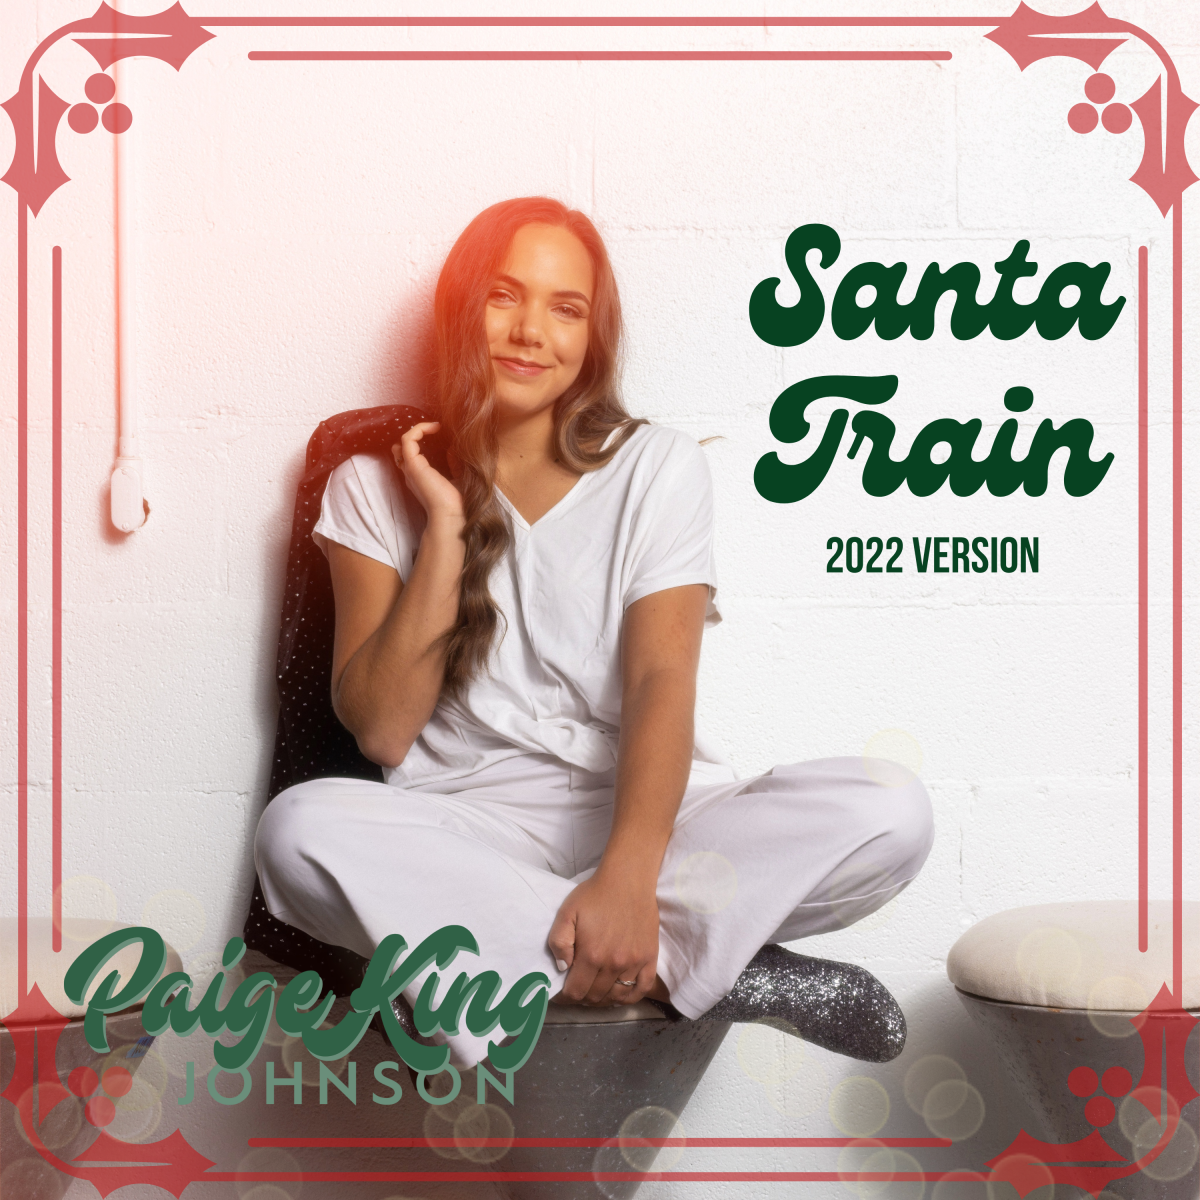 Santa-Train-2022-Version-Paige-King-Johnson.png